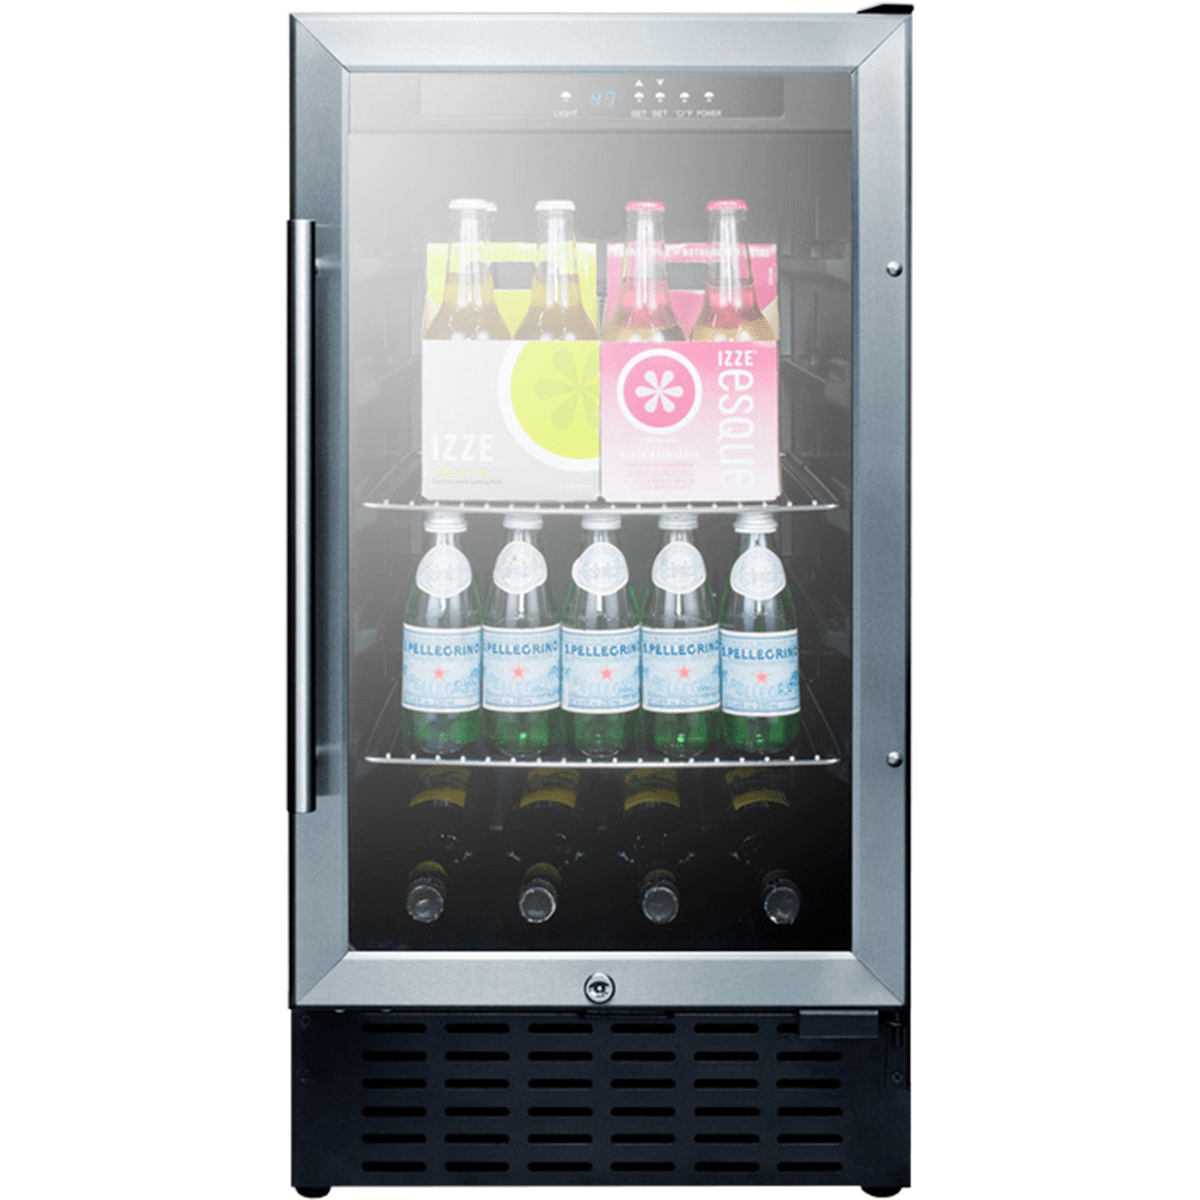 SUMMIT 18-Inch Glass Door Beverage Cooler w/ Digital Controls (SCR1841B)